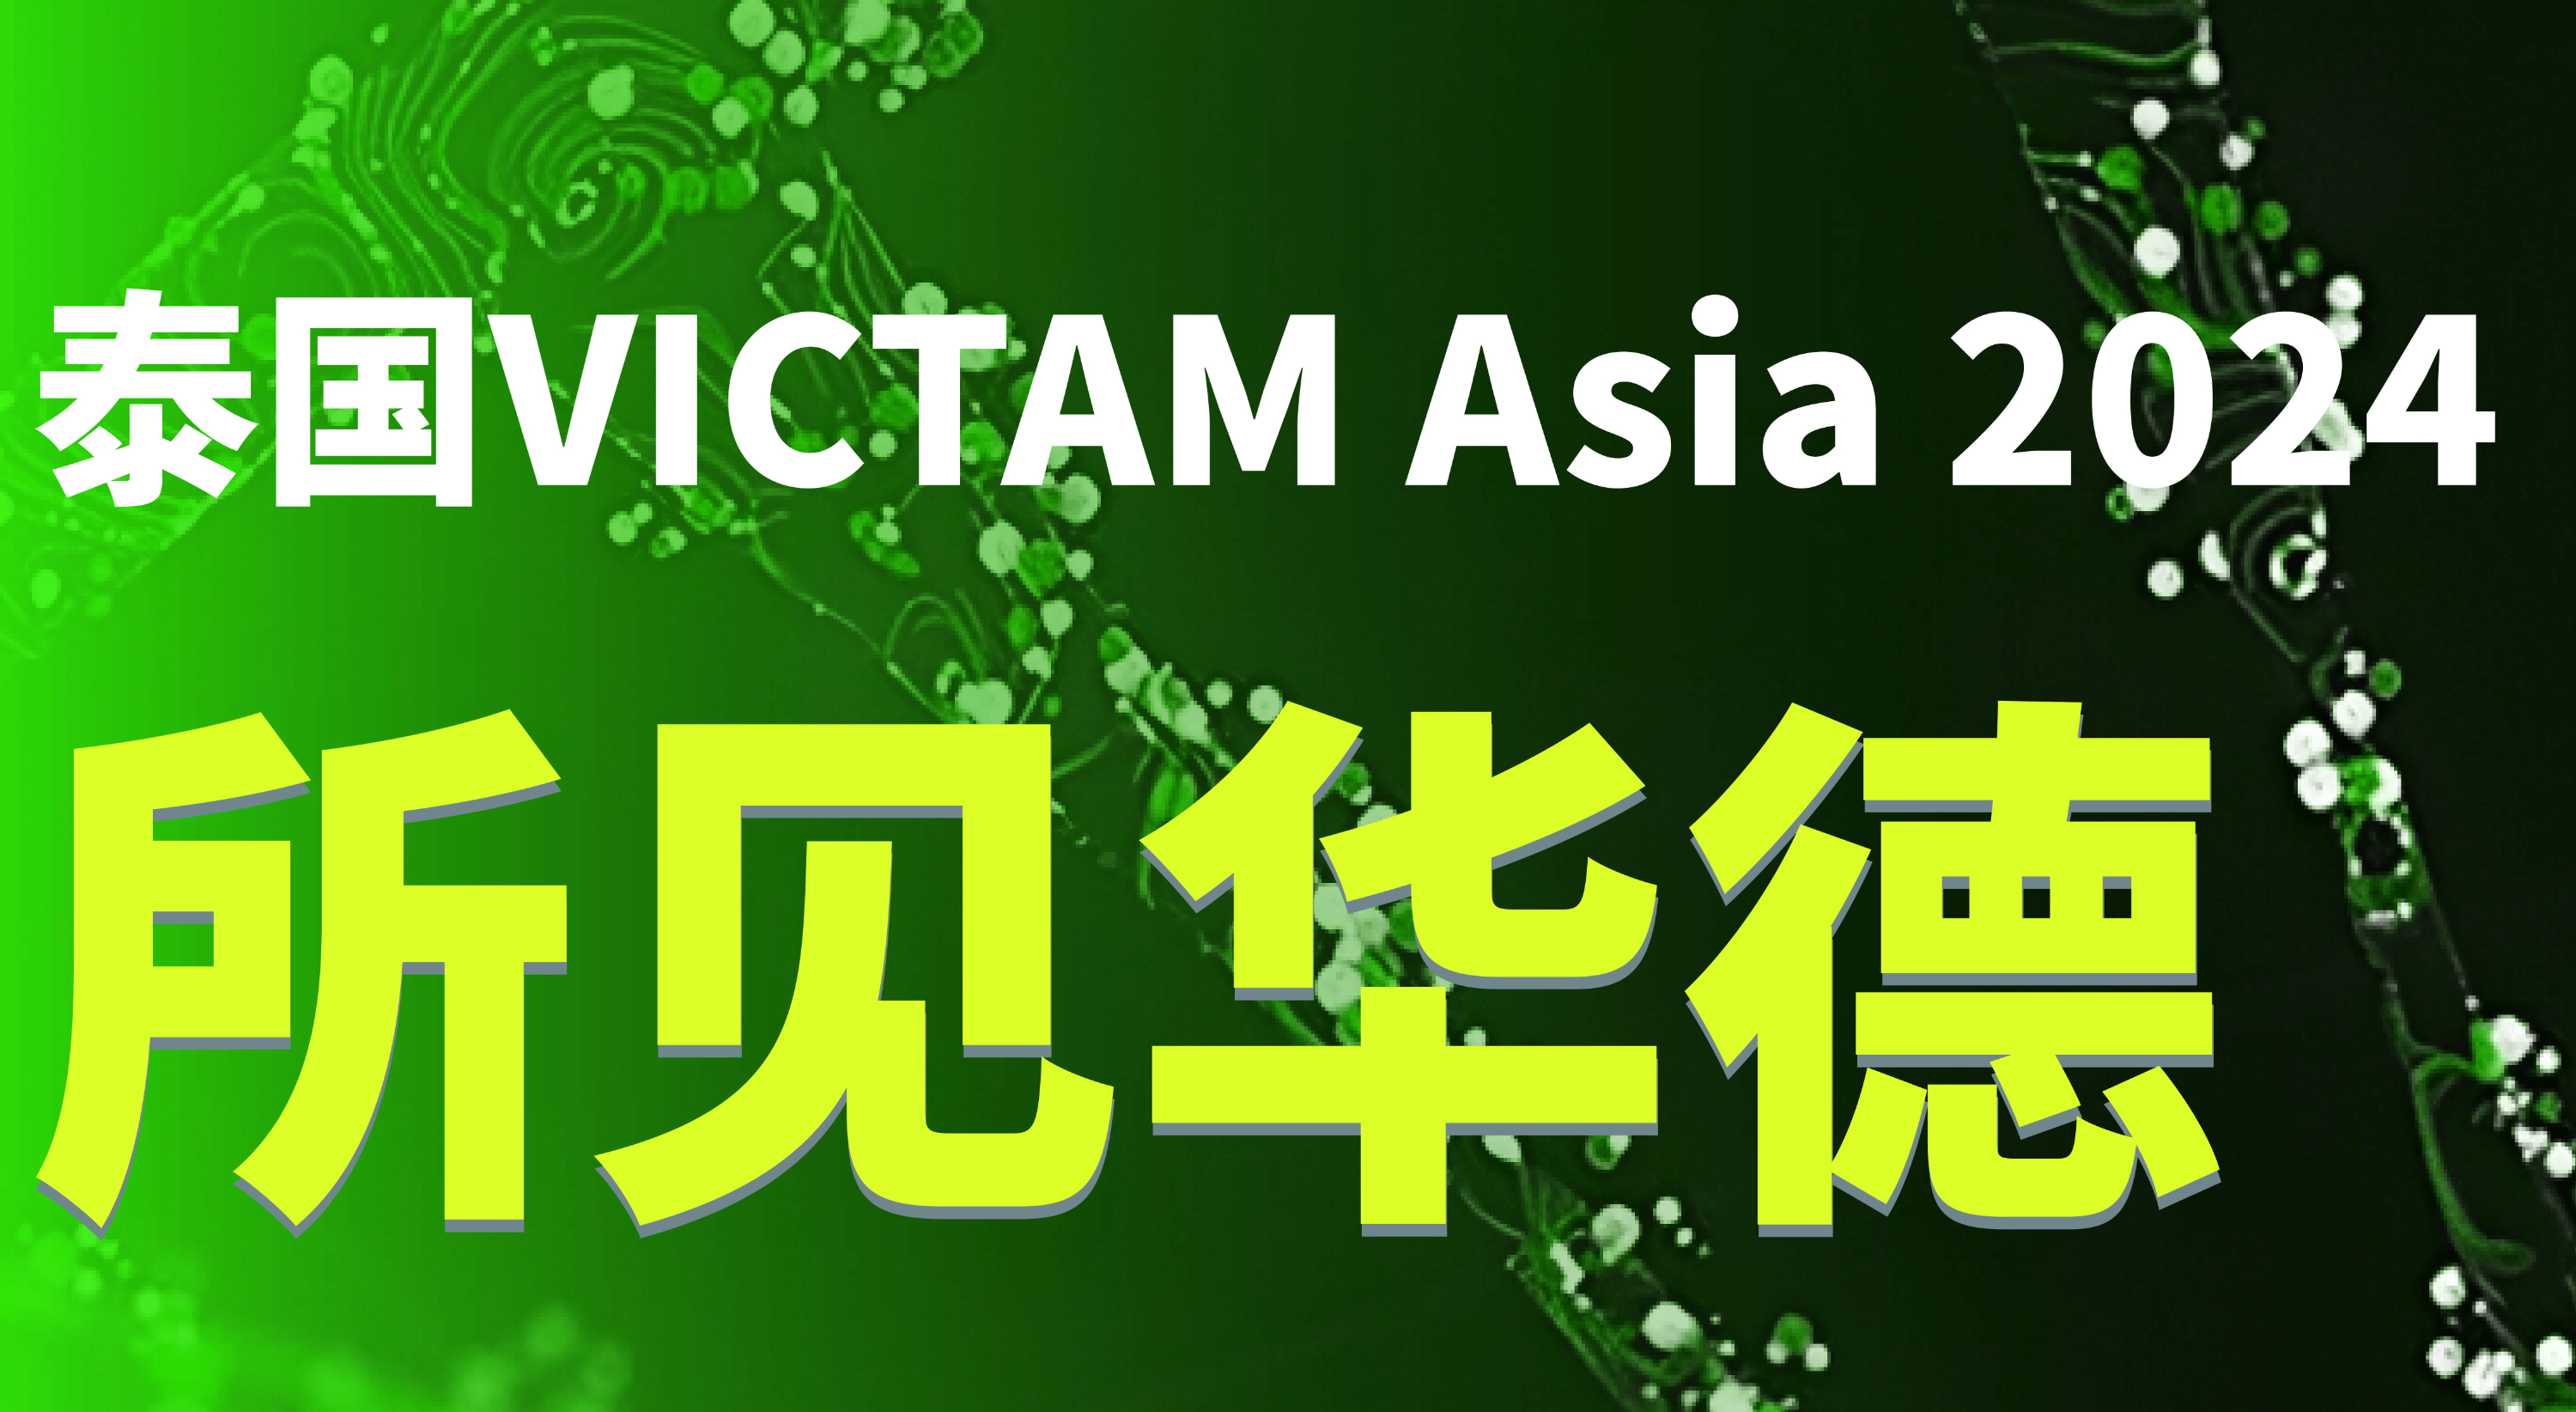 1382cm太阳在线玩游戏生物泰国VICTAM Asia 2024展会圆满结束!